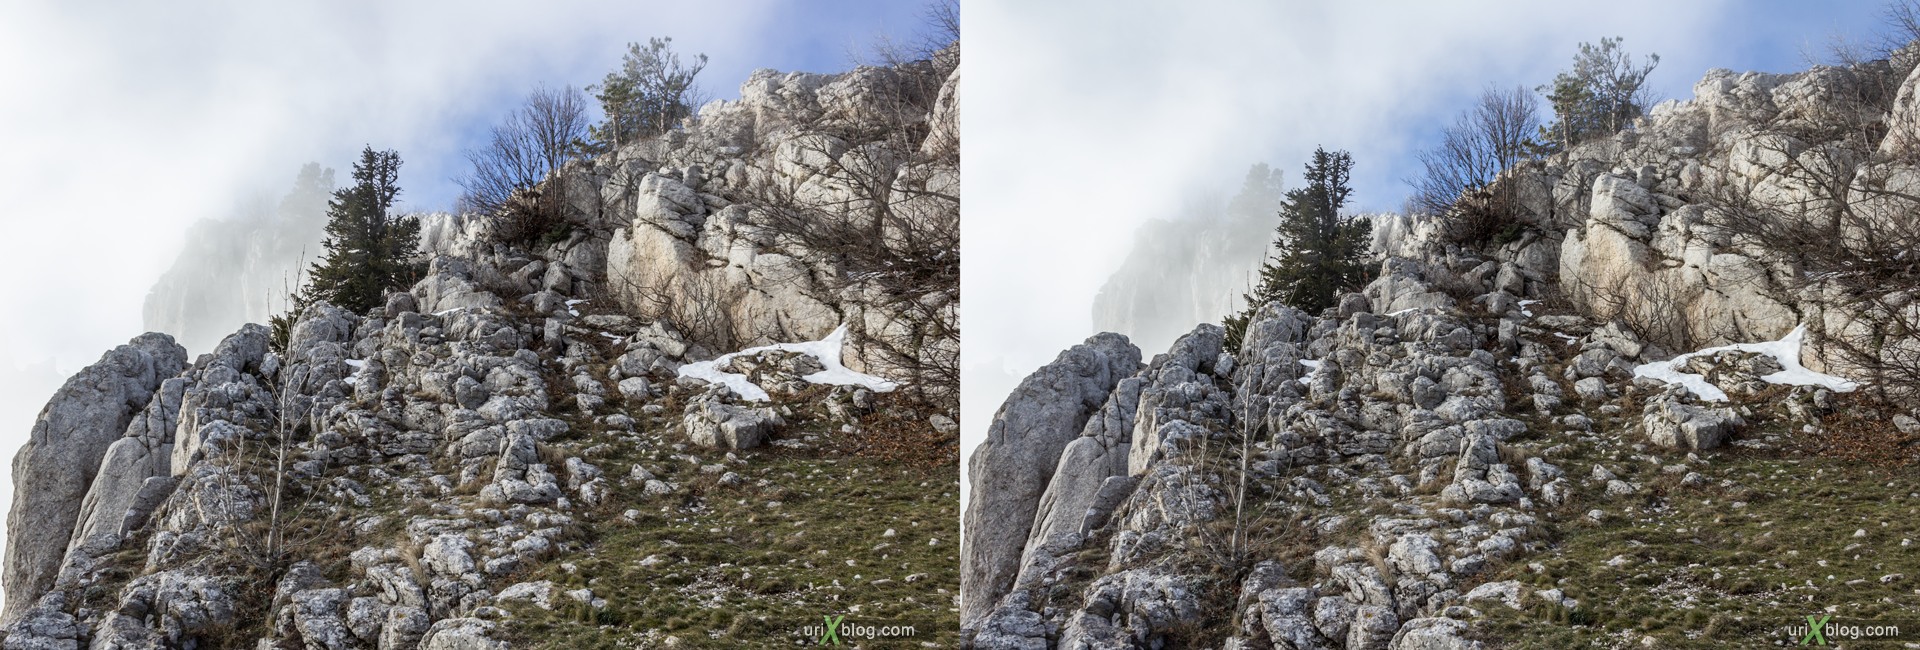 2012, Ai-Petri, mountains, Crimea, Russia, Ukraine, sky, clouds, snow, winter, 3D, stereo pair, cross-eyed, crossview, cross view stereo pair, stereoscopic